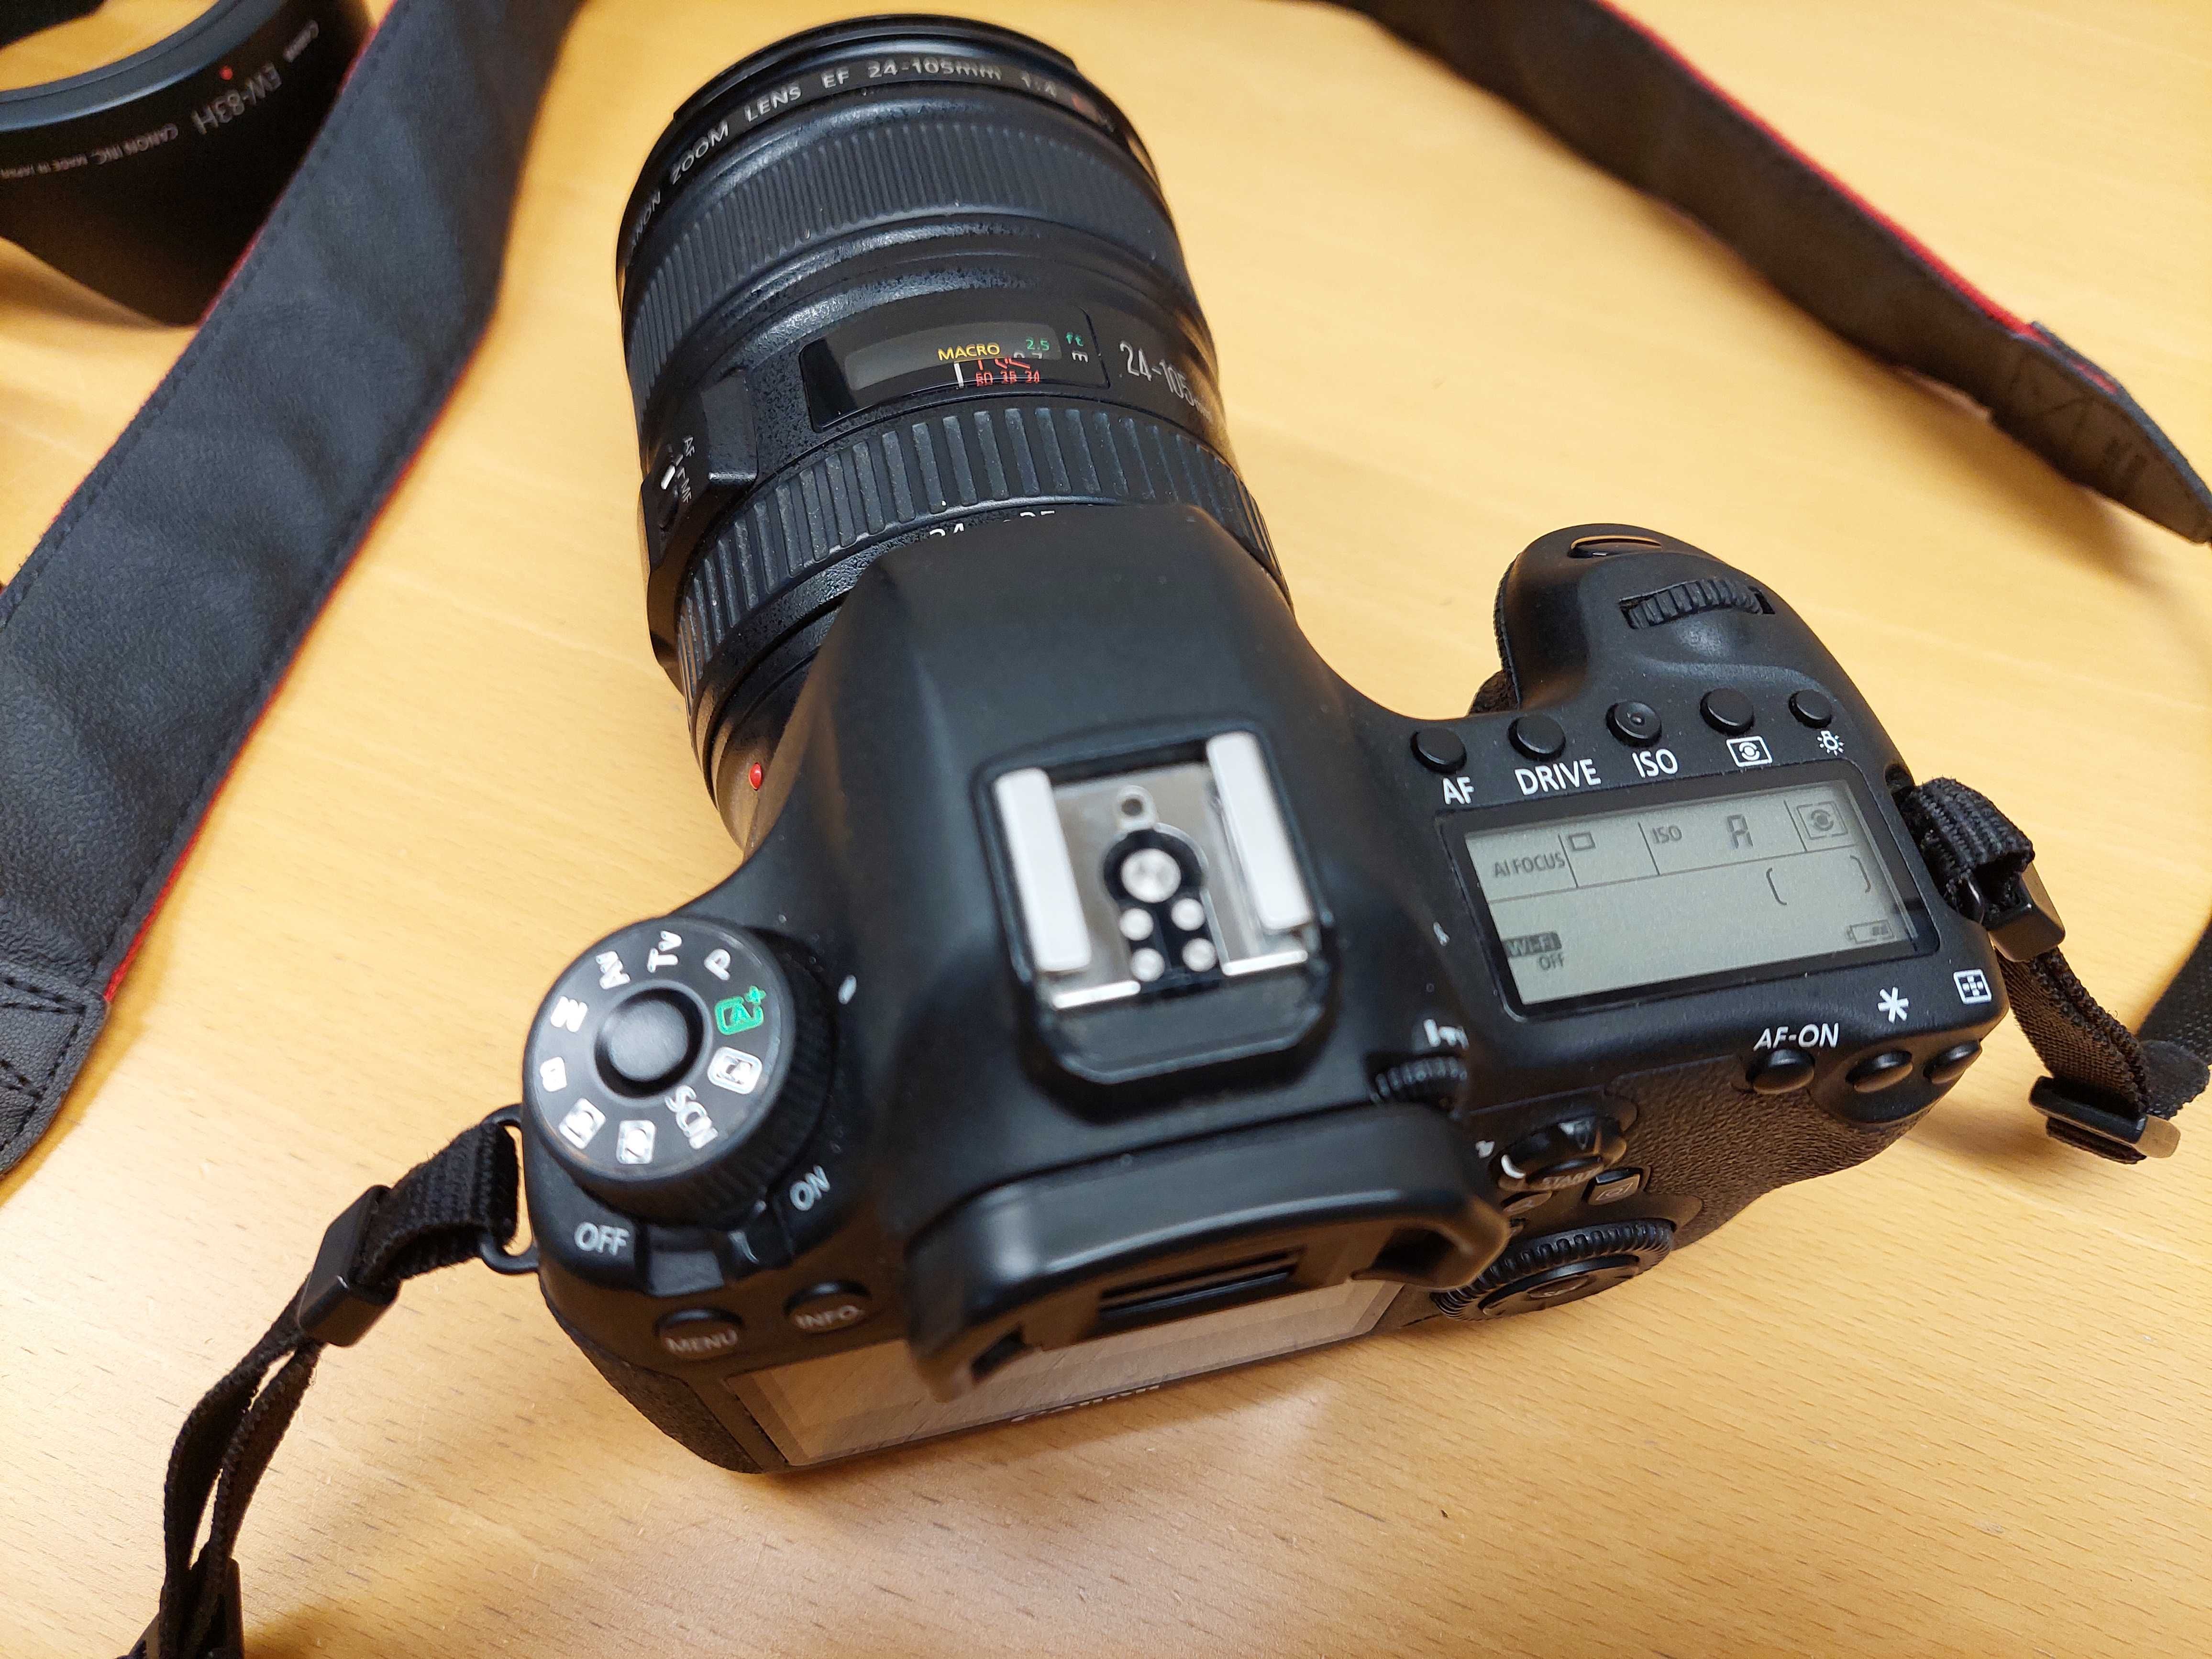 Aparat Canon EOS 6D (przeb. 27 tys) + Canon EF 24-105 f/4L IS USM